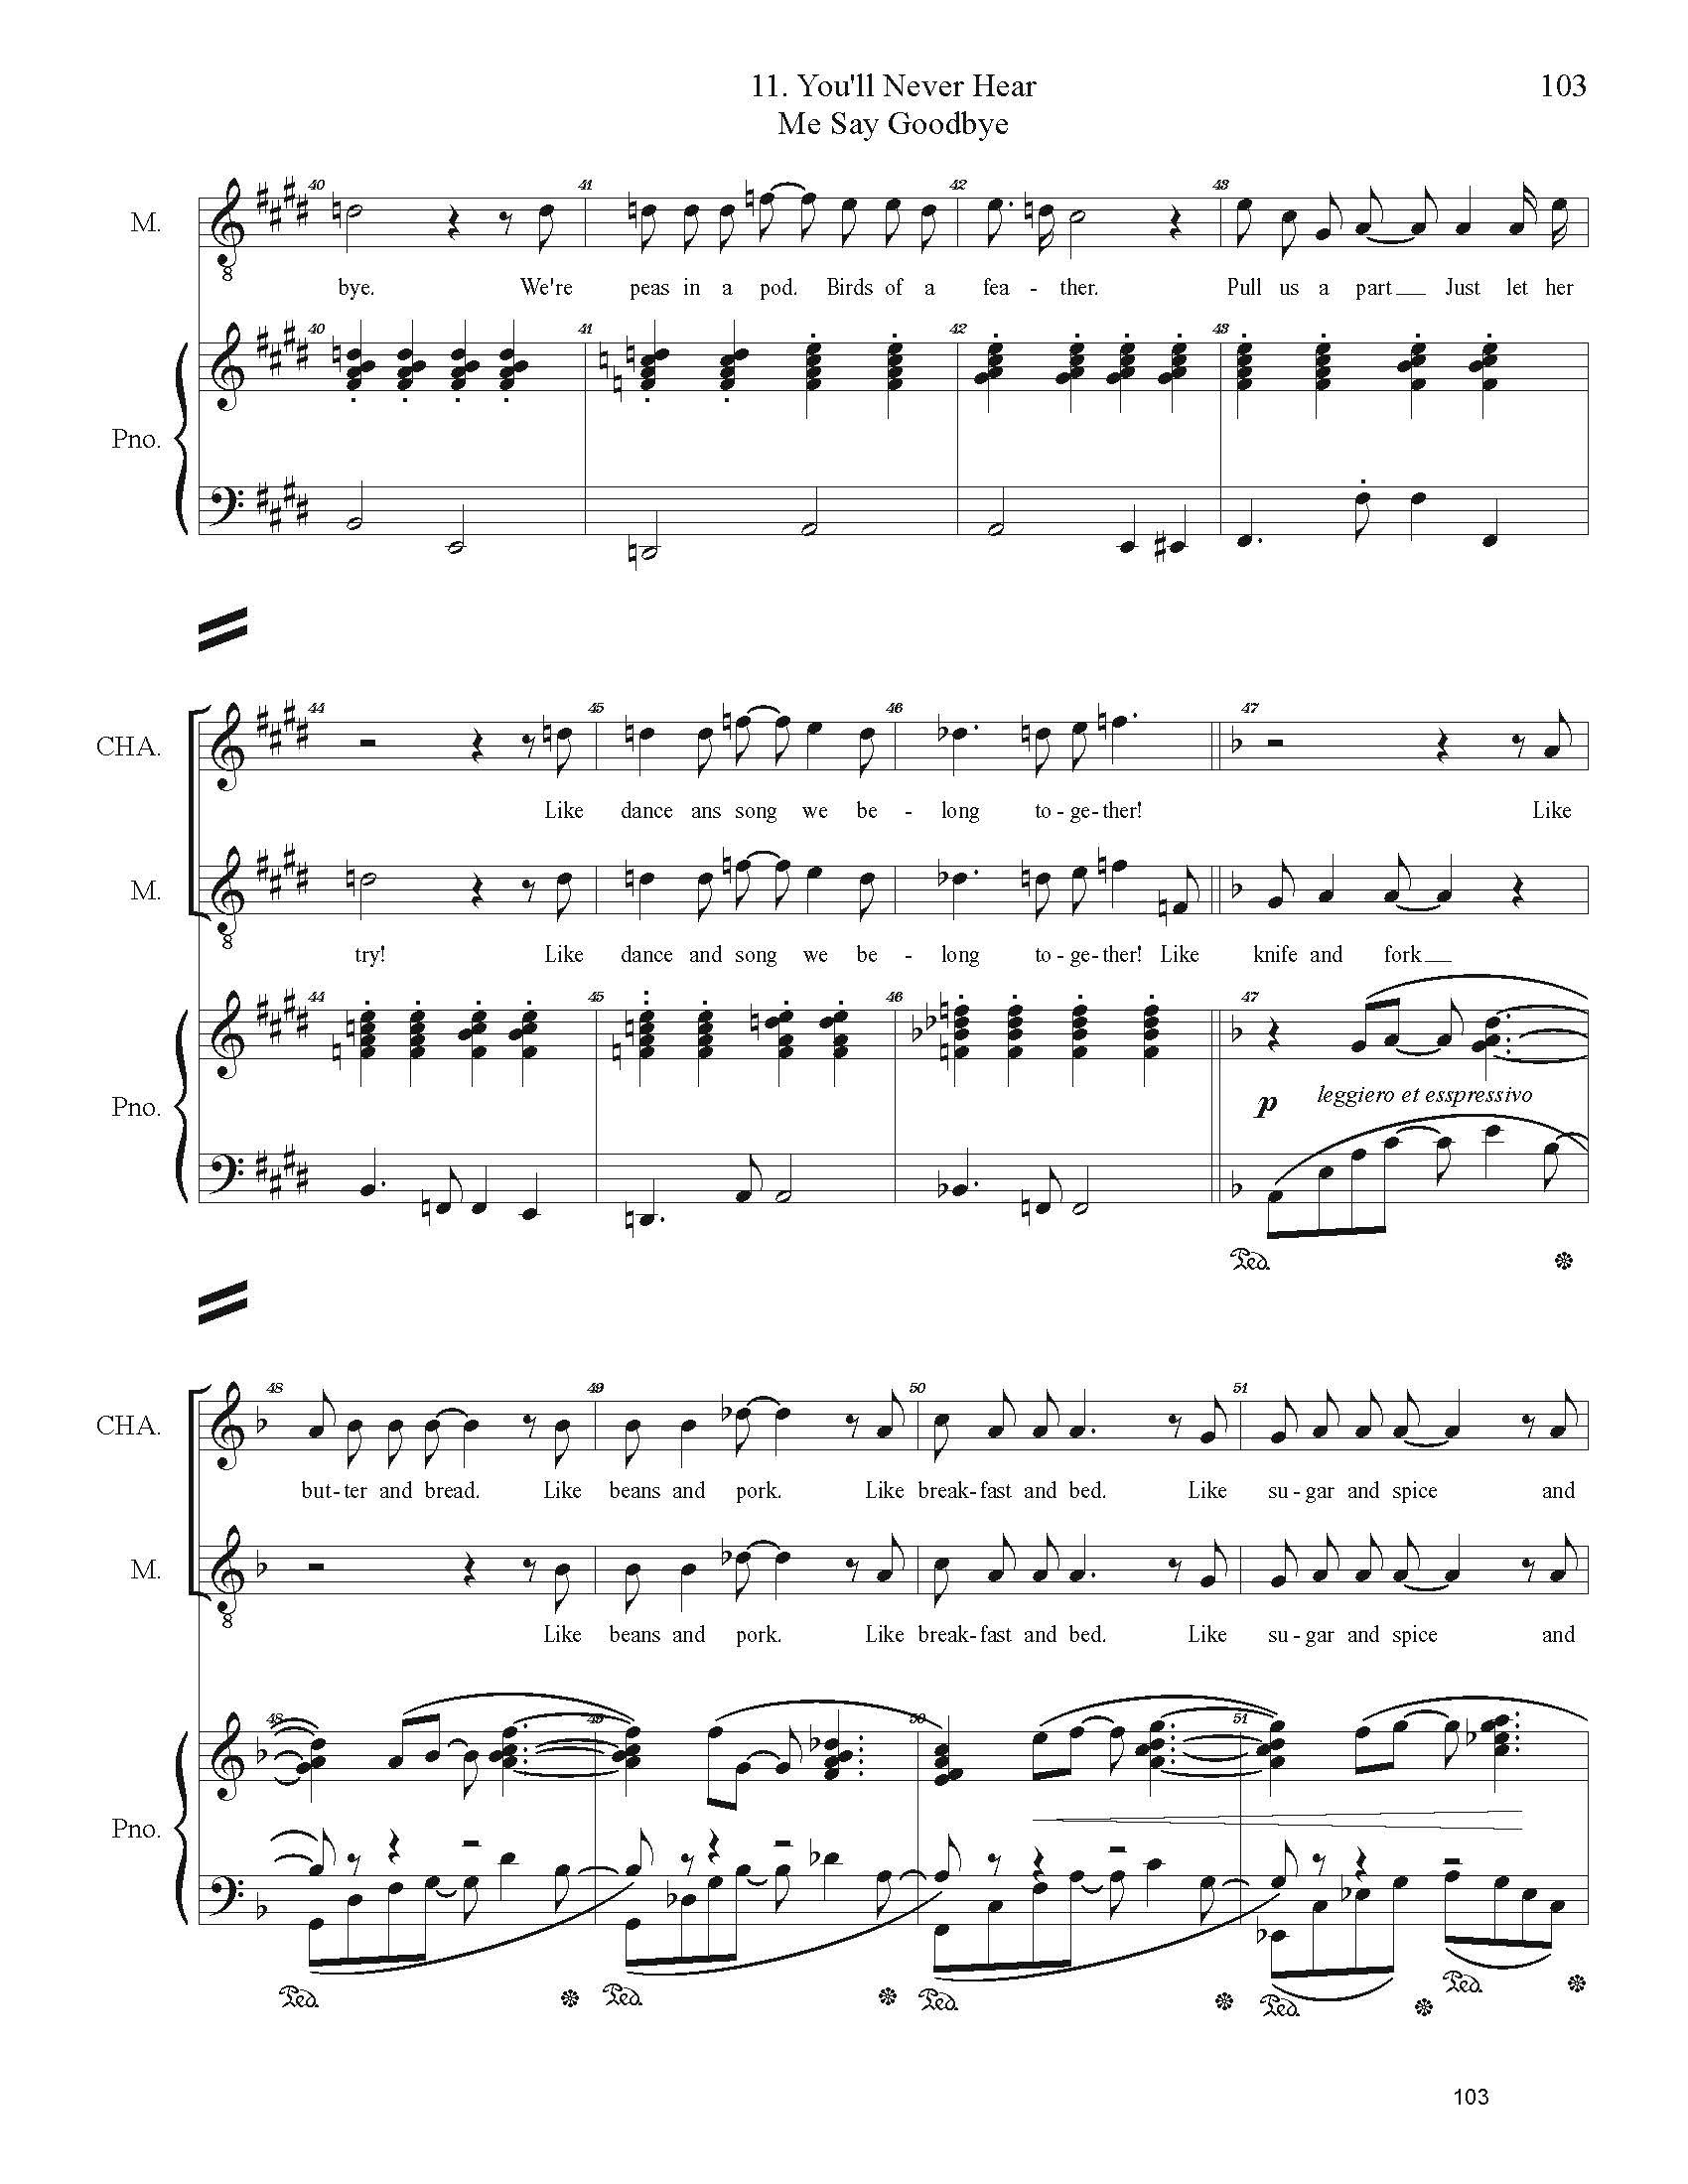 FULL PIANO VOCAL SCORE DRAFT 1 - Score_Page_103.jpg